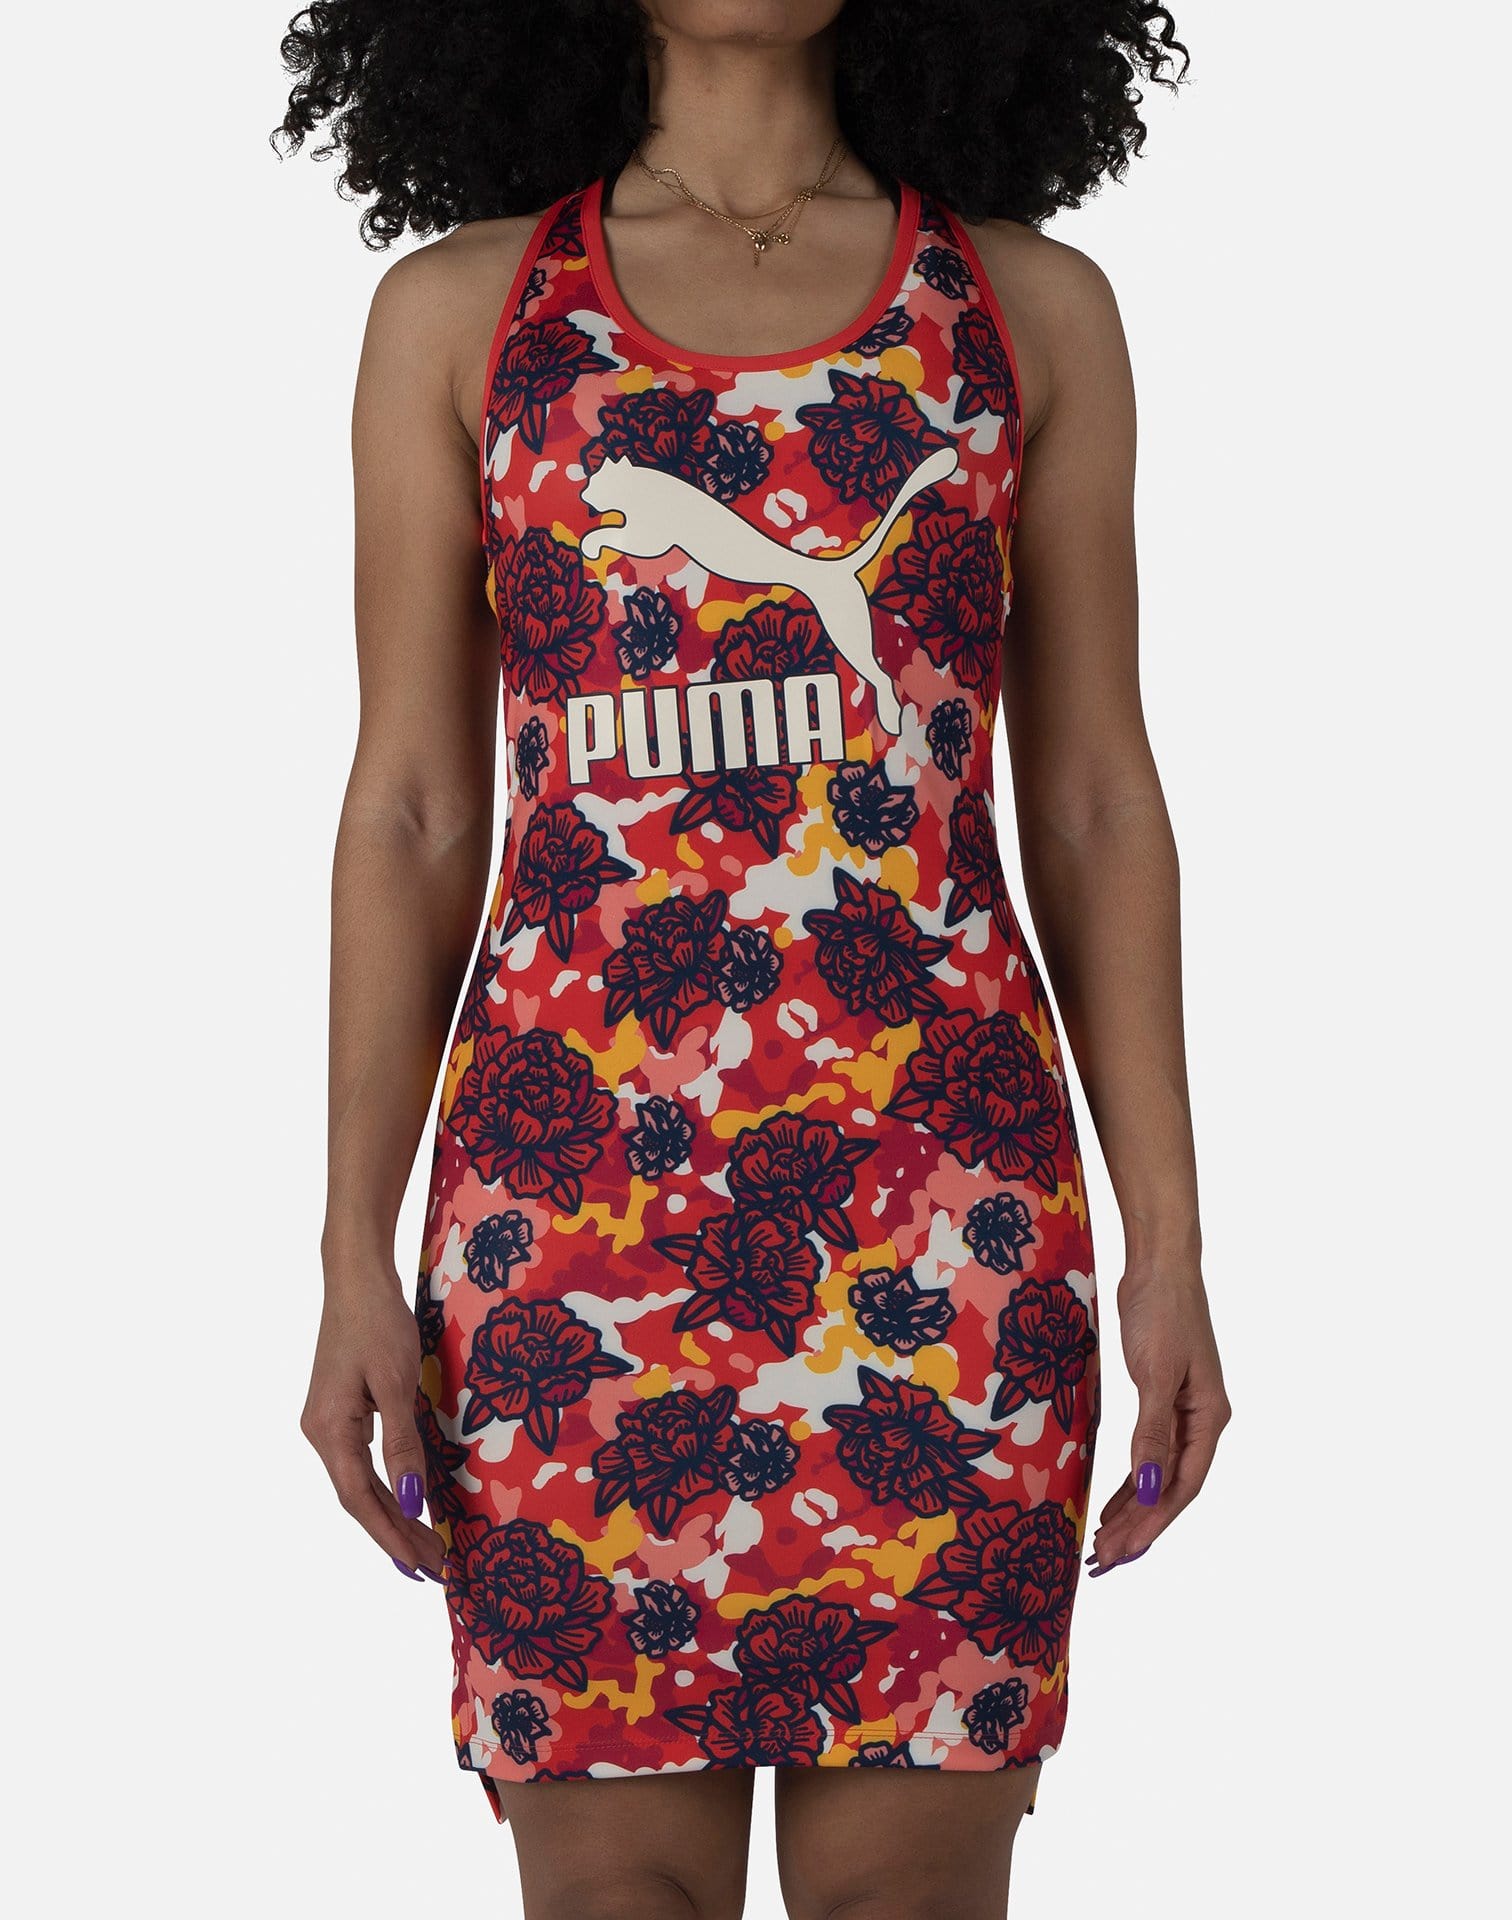 PUMA Women's Flourish XTG Bodycon Dress